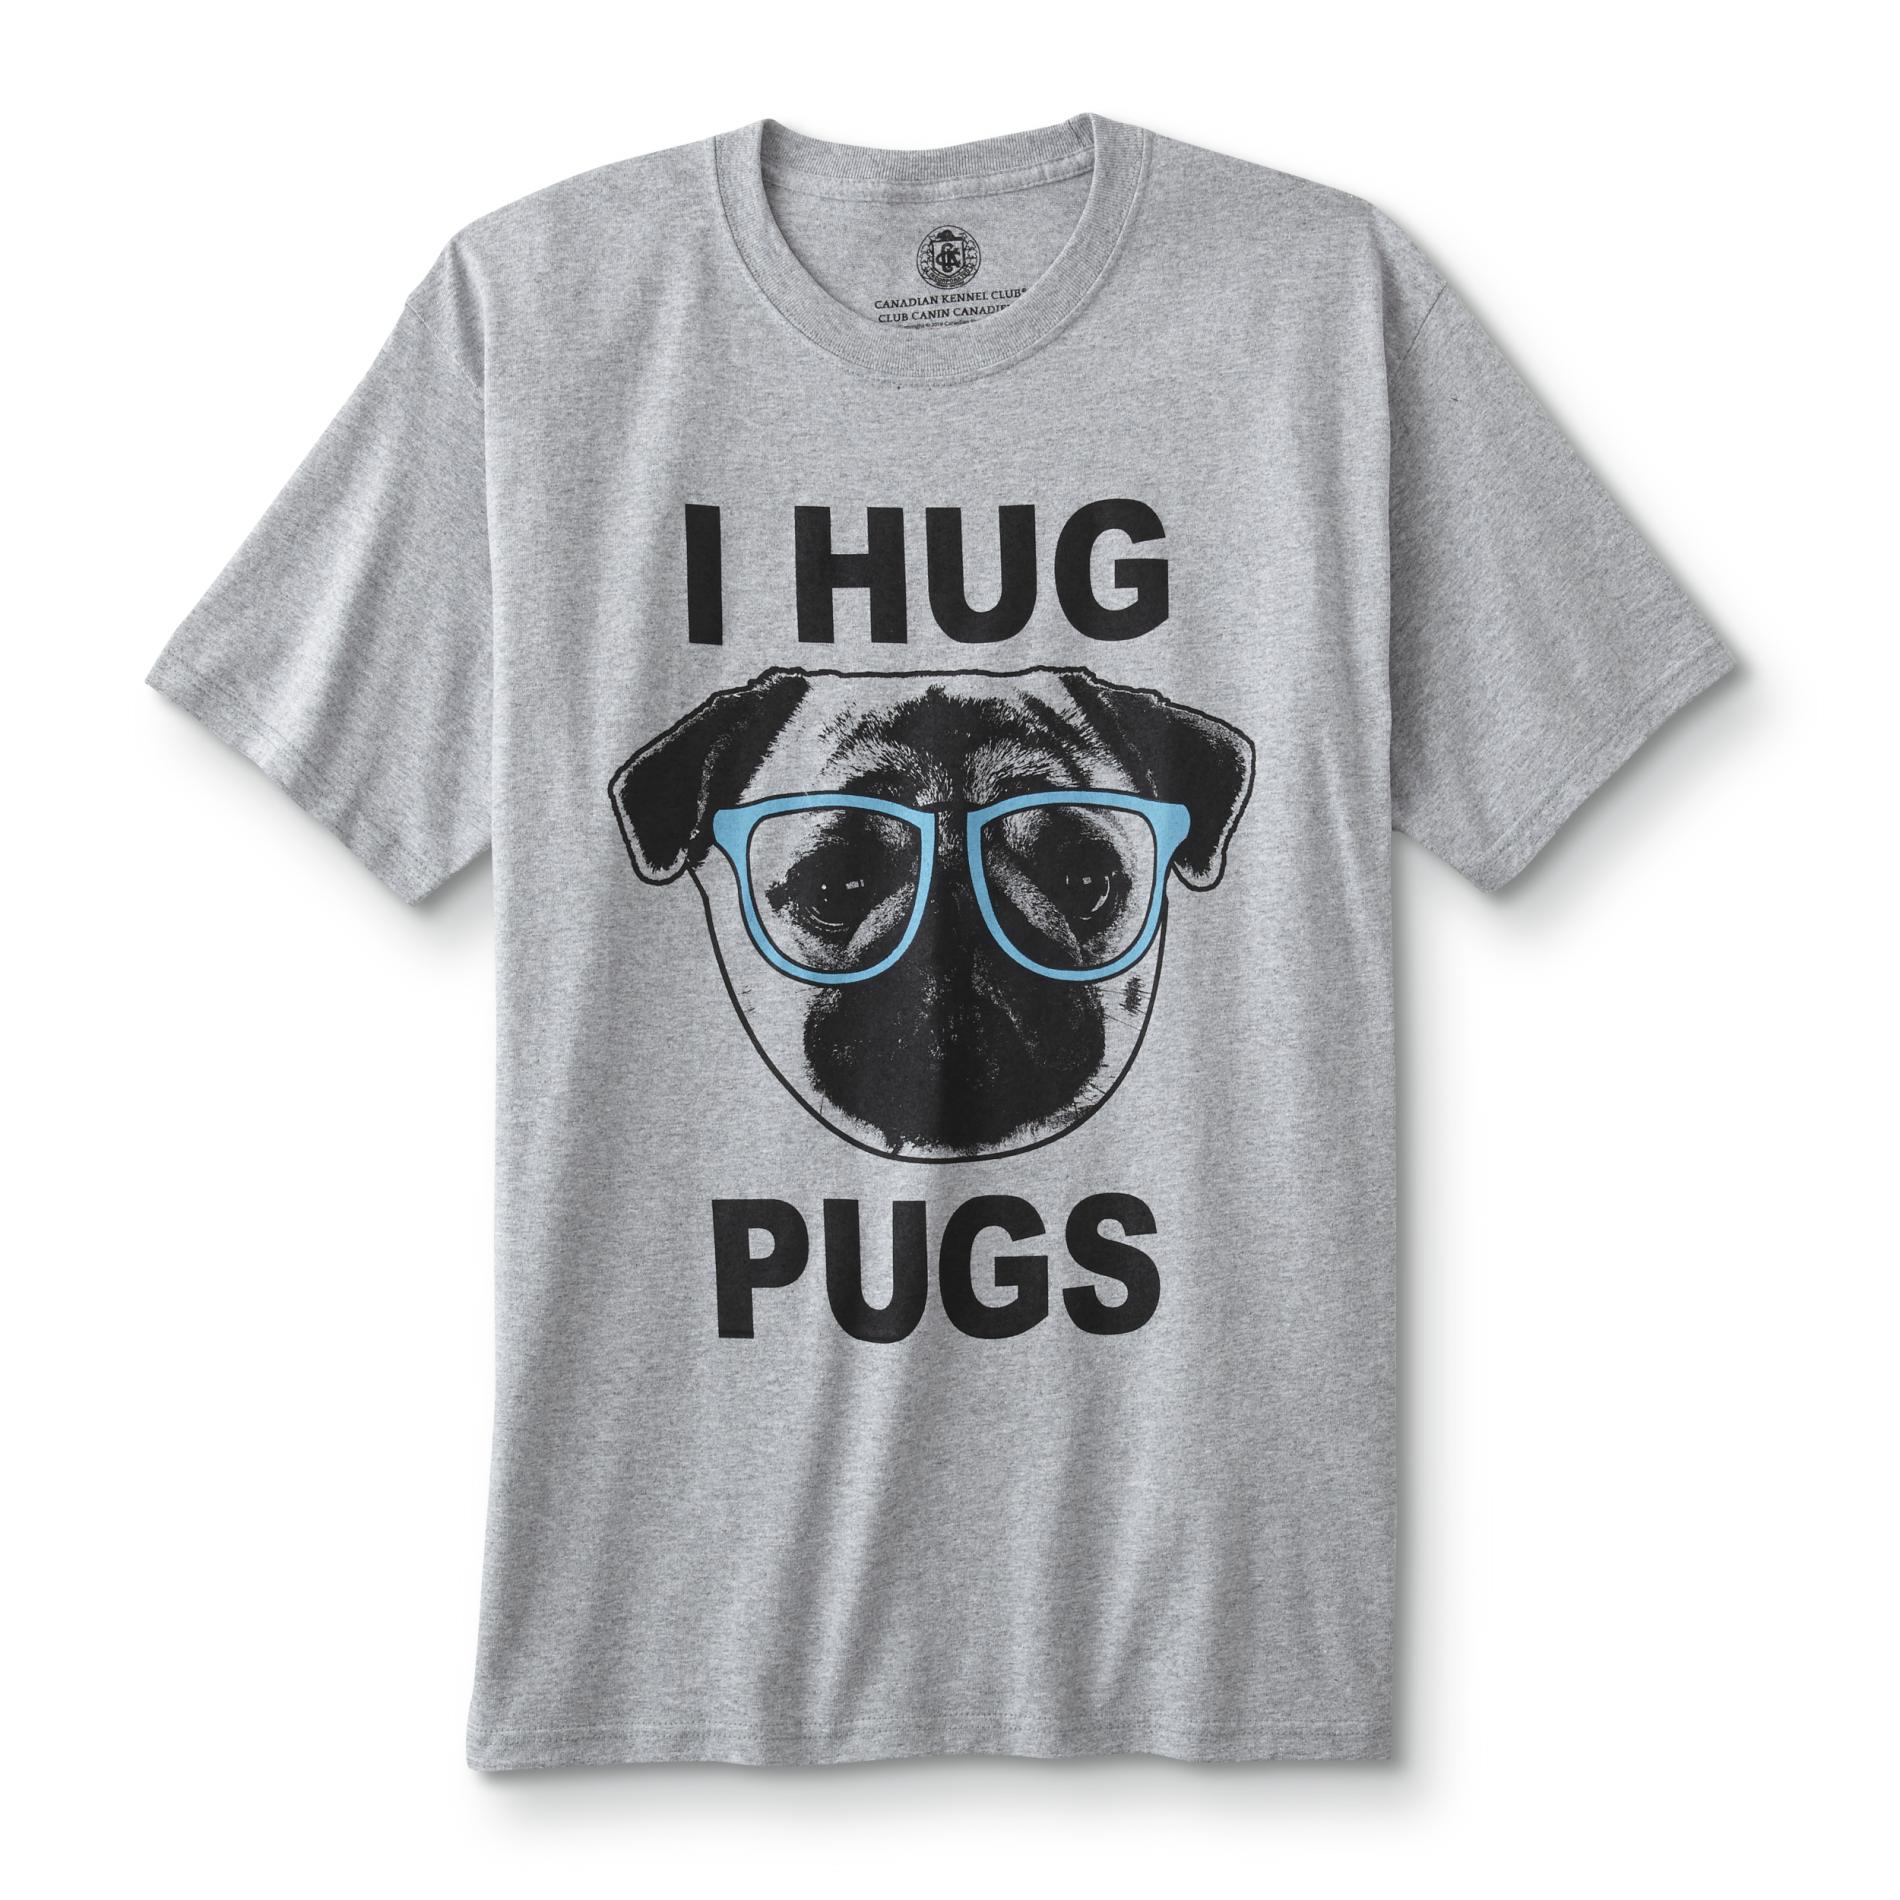 Men's Graphic T-Shirt - Hug Pugs